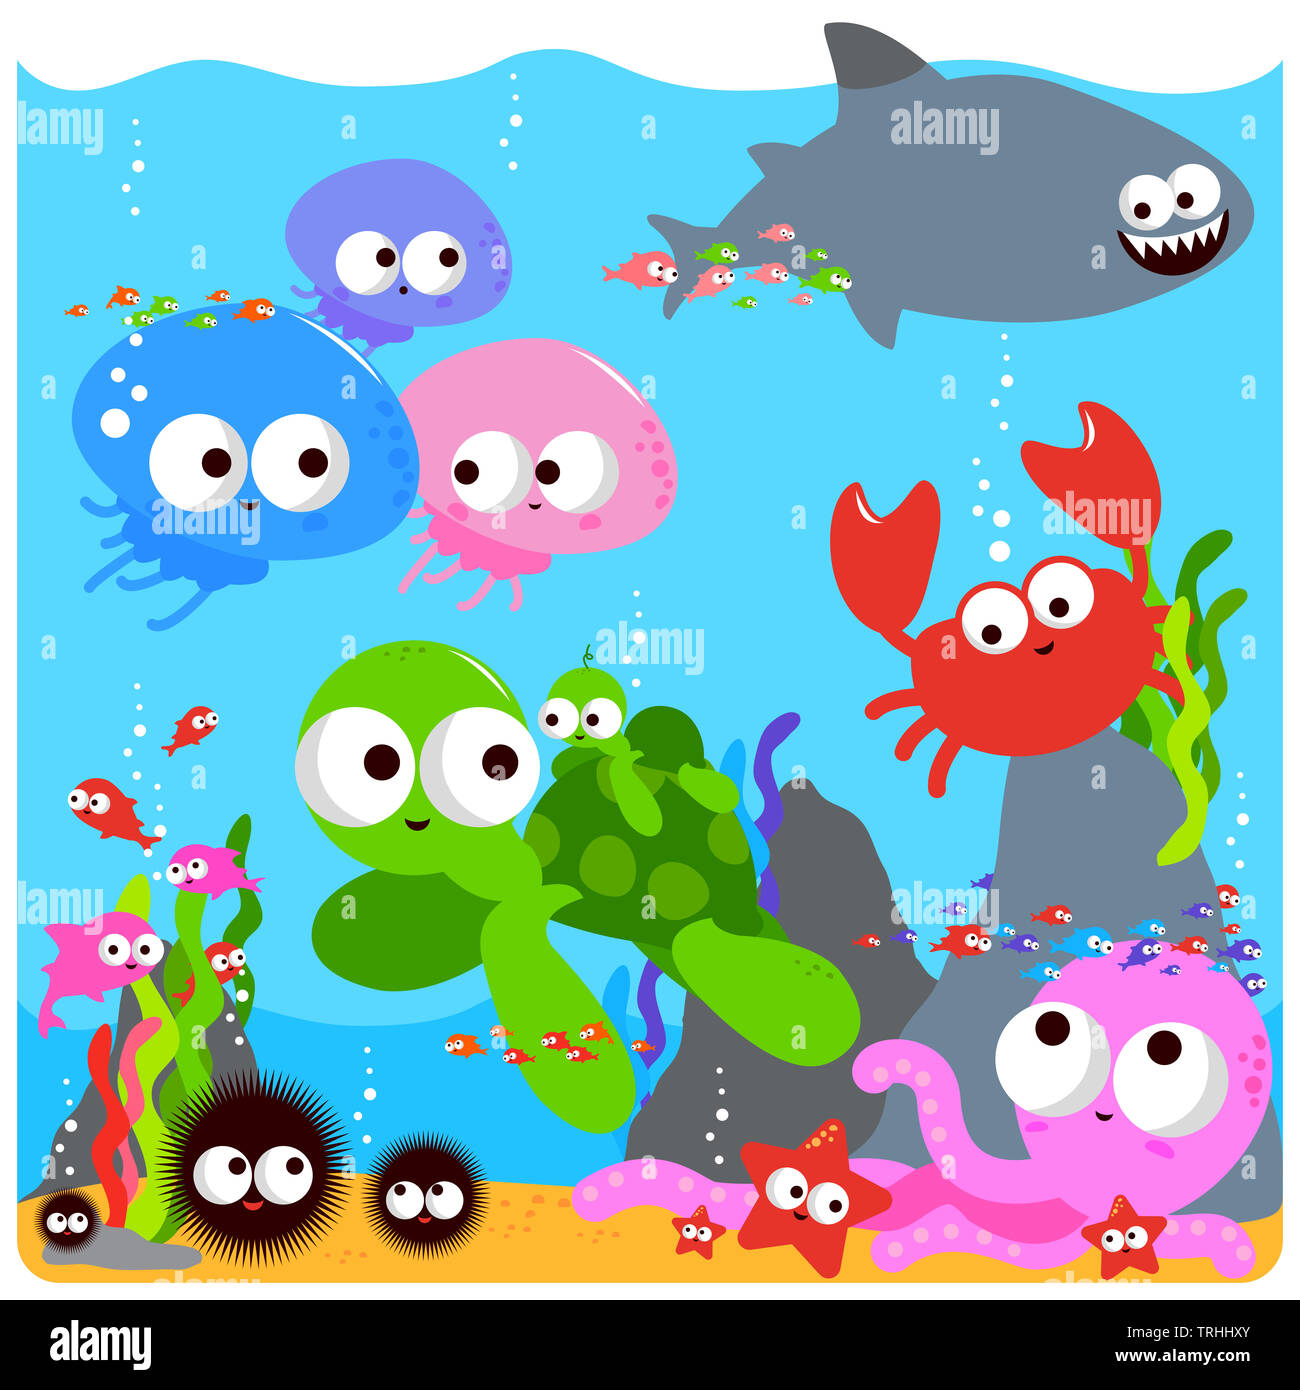 Illustration of colorful sea animals swimming underwater. Stock Photo